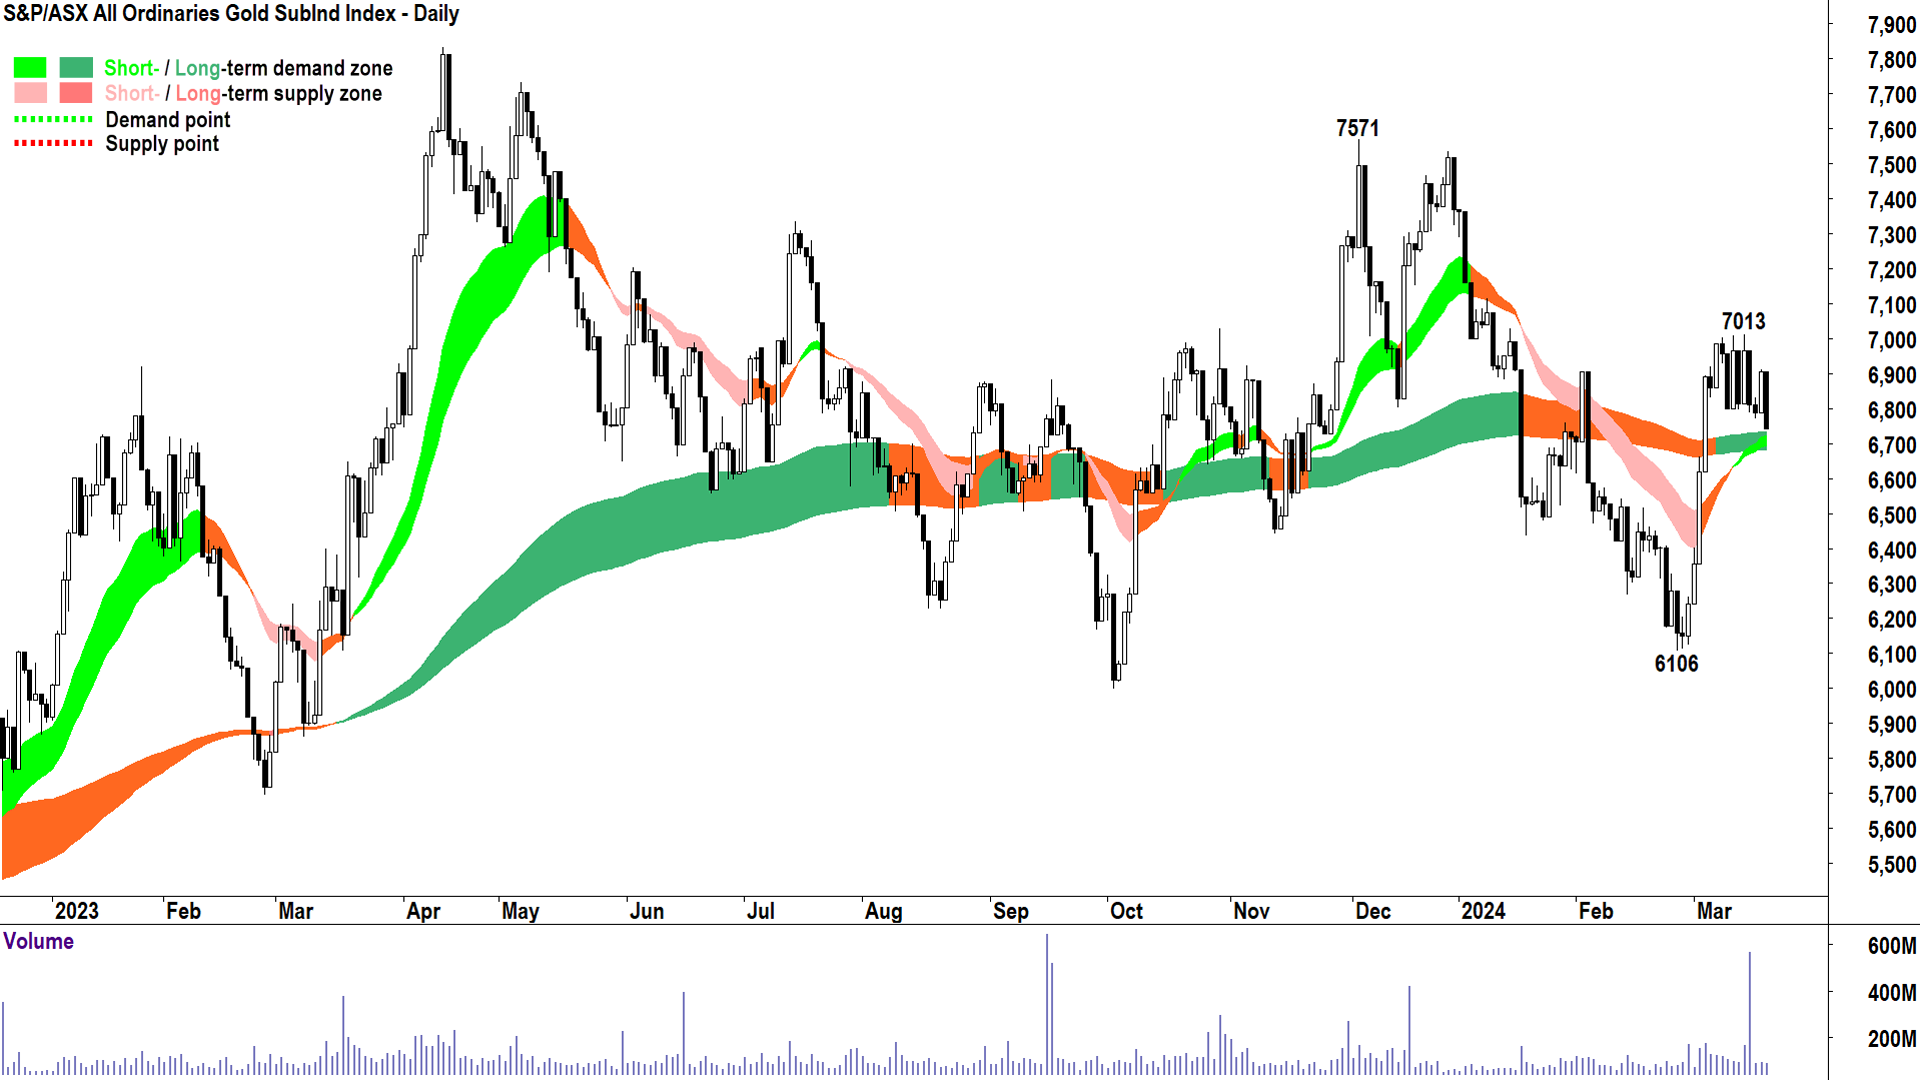 S&P ASX 200 Gold Sector (XGD) chart